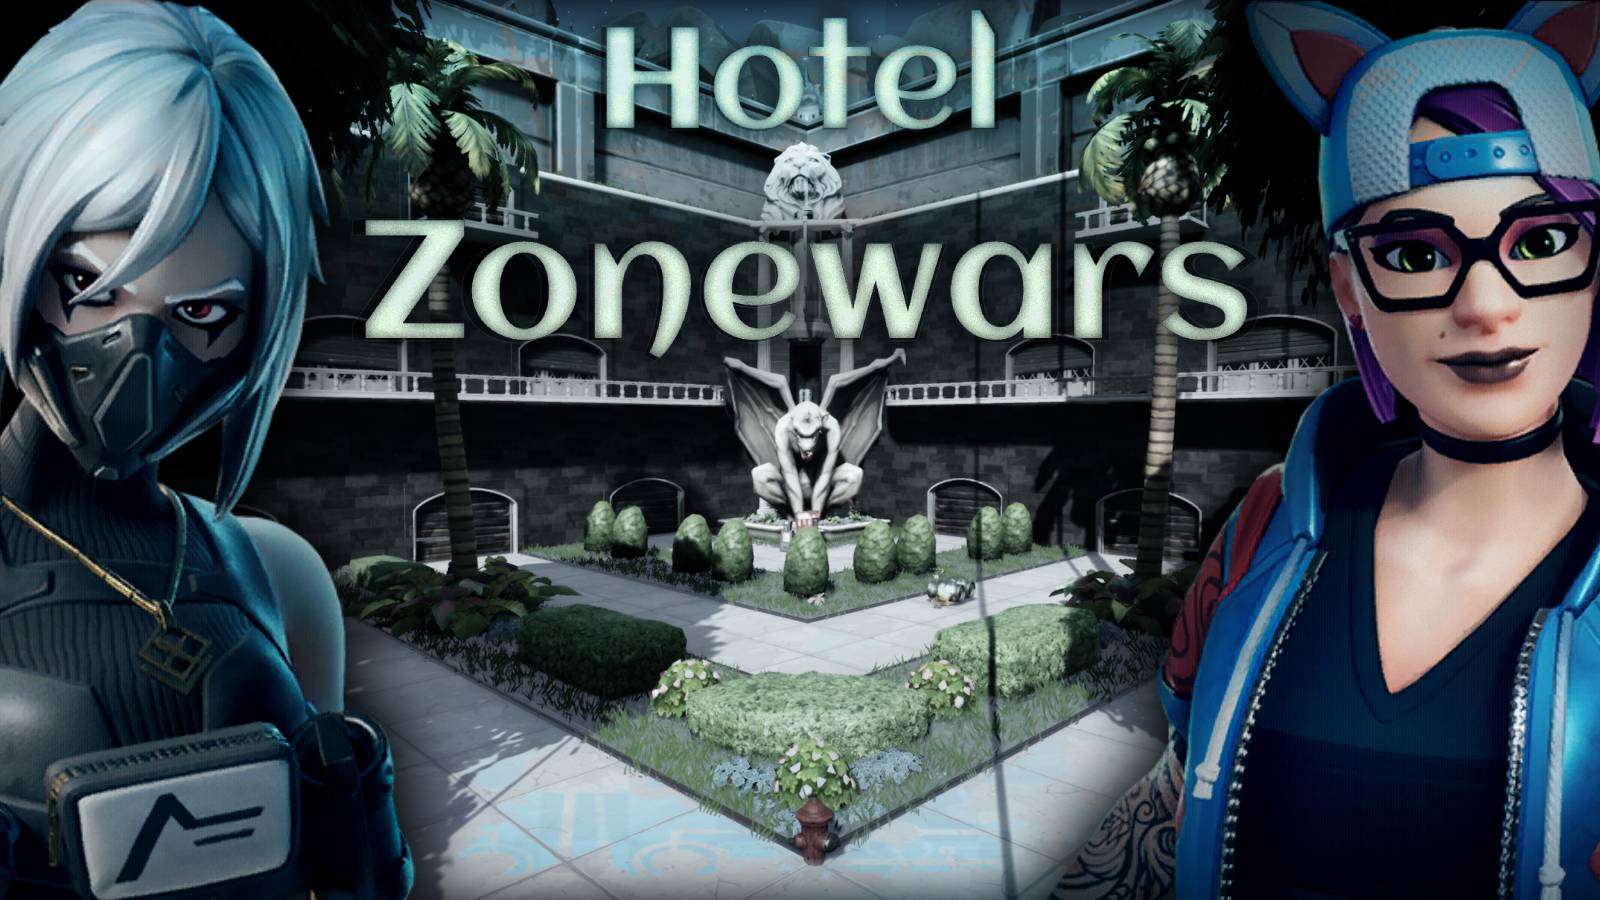 ZONEWARS - HOTEL